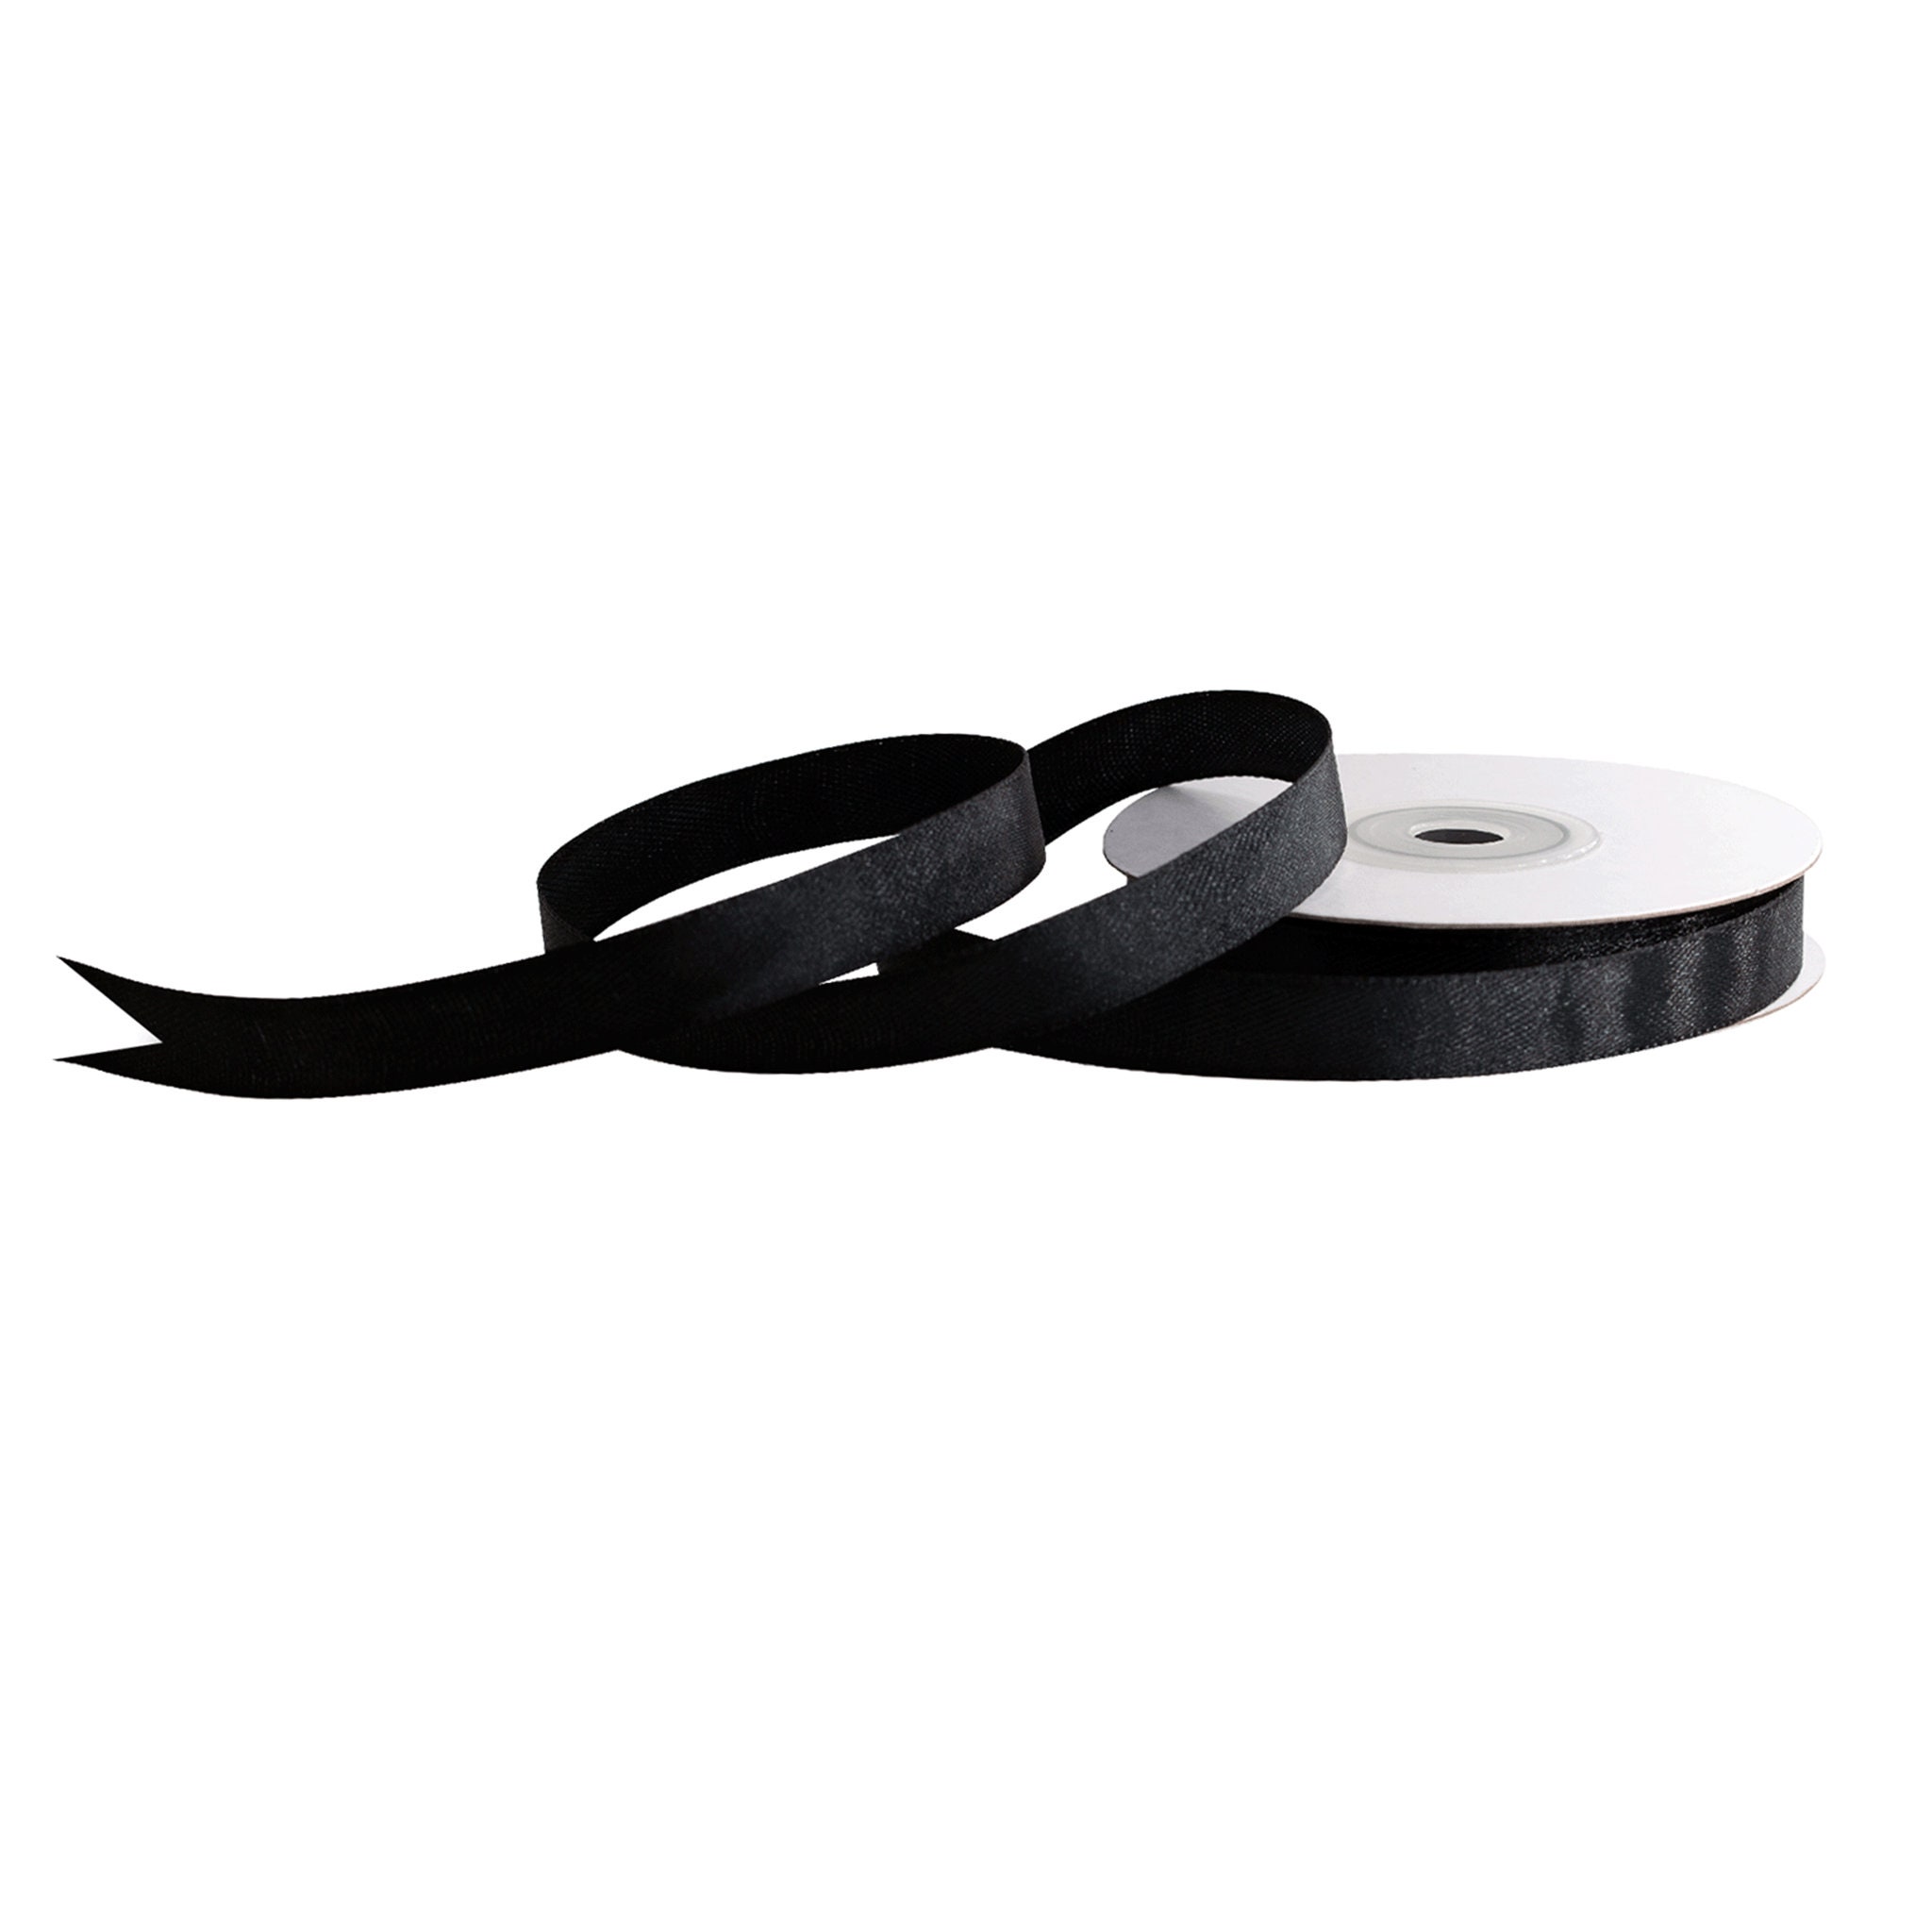 Narrow Black Satin Ribbon 12 Mm 1/2 Double Faced Pure Black Satin Ribbon  Thin Midnight Black Gift Wrapping Ribbon 